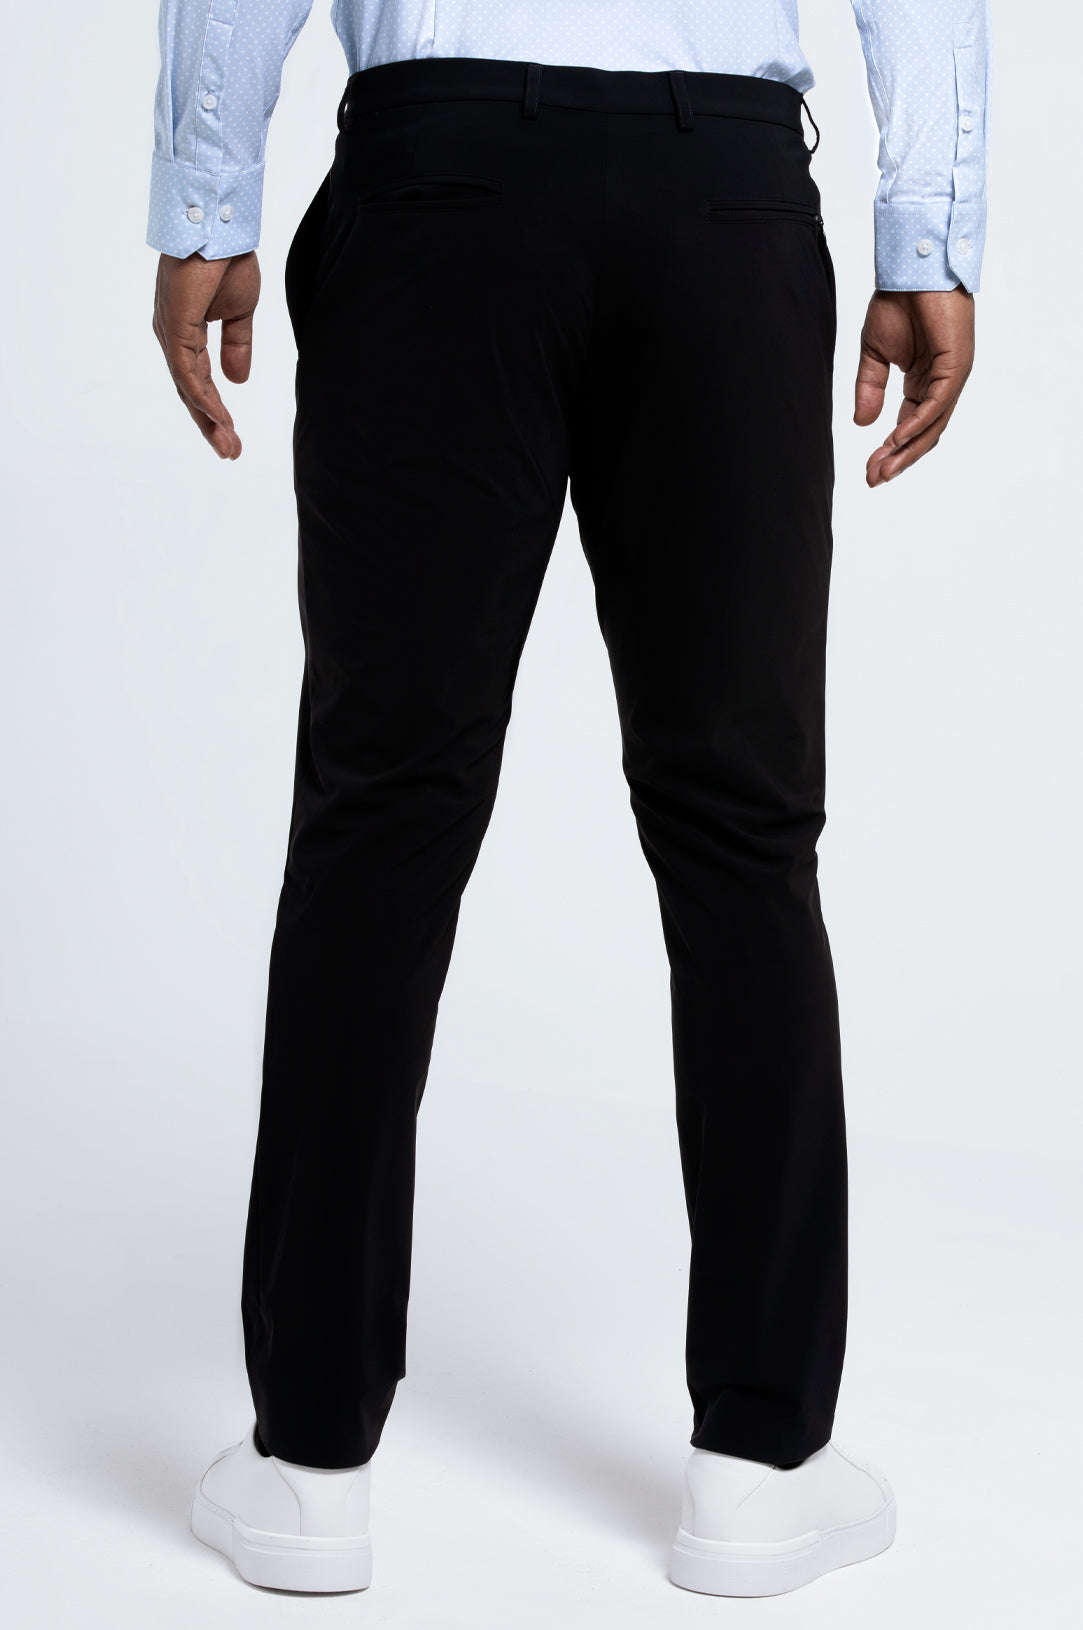 Men's Black Chinos & Khaki Pants | Nordstrom